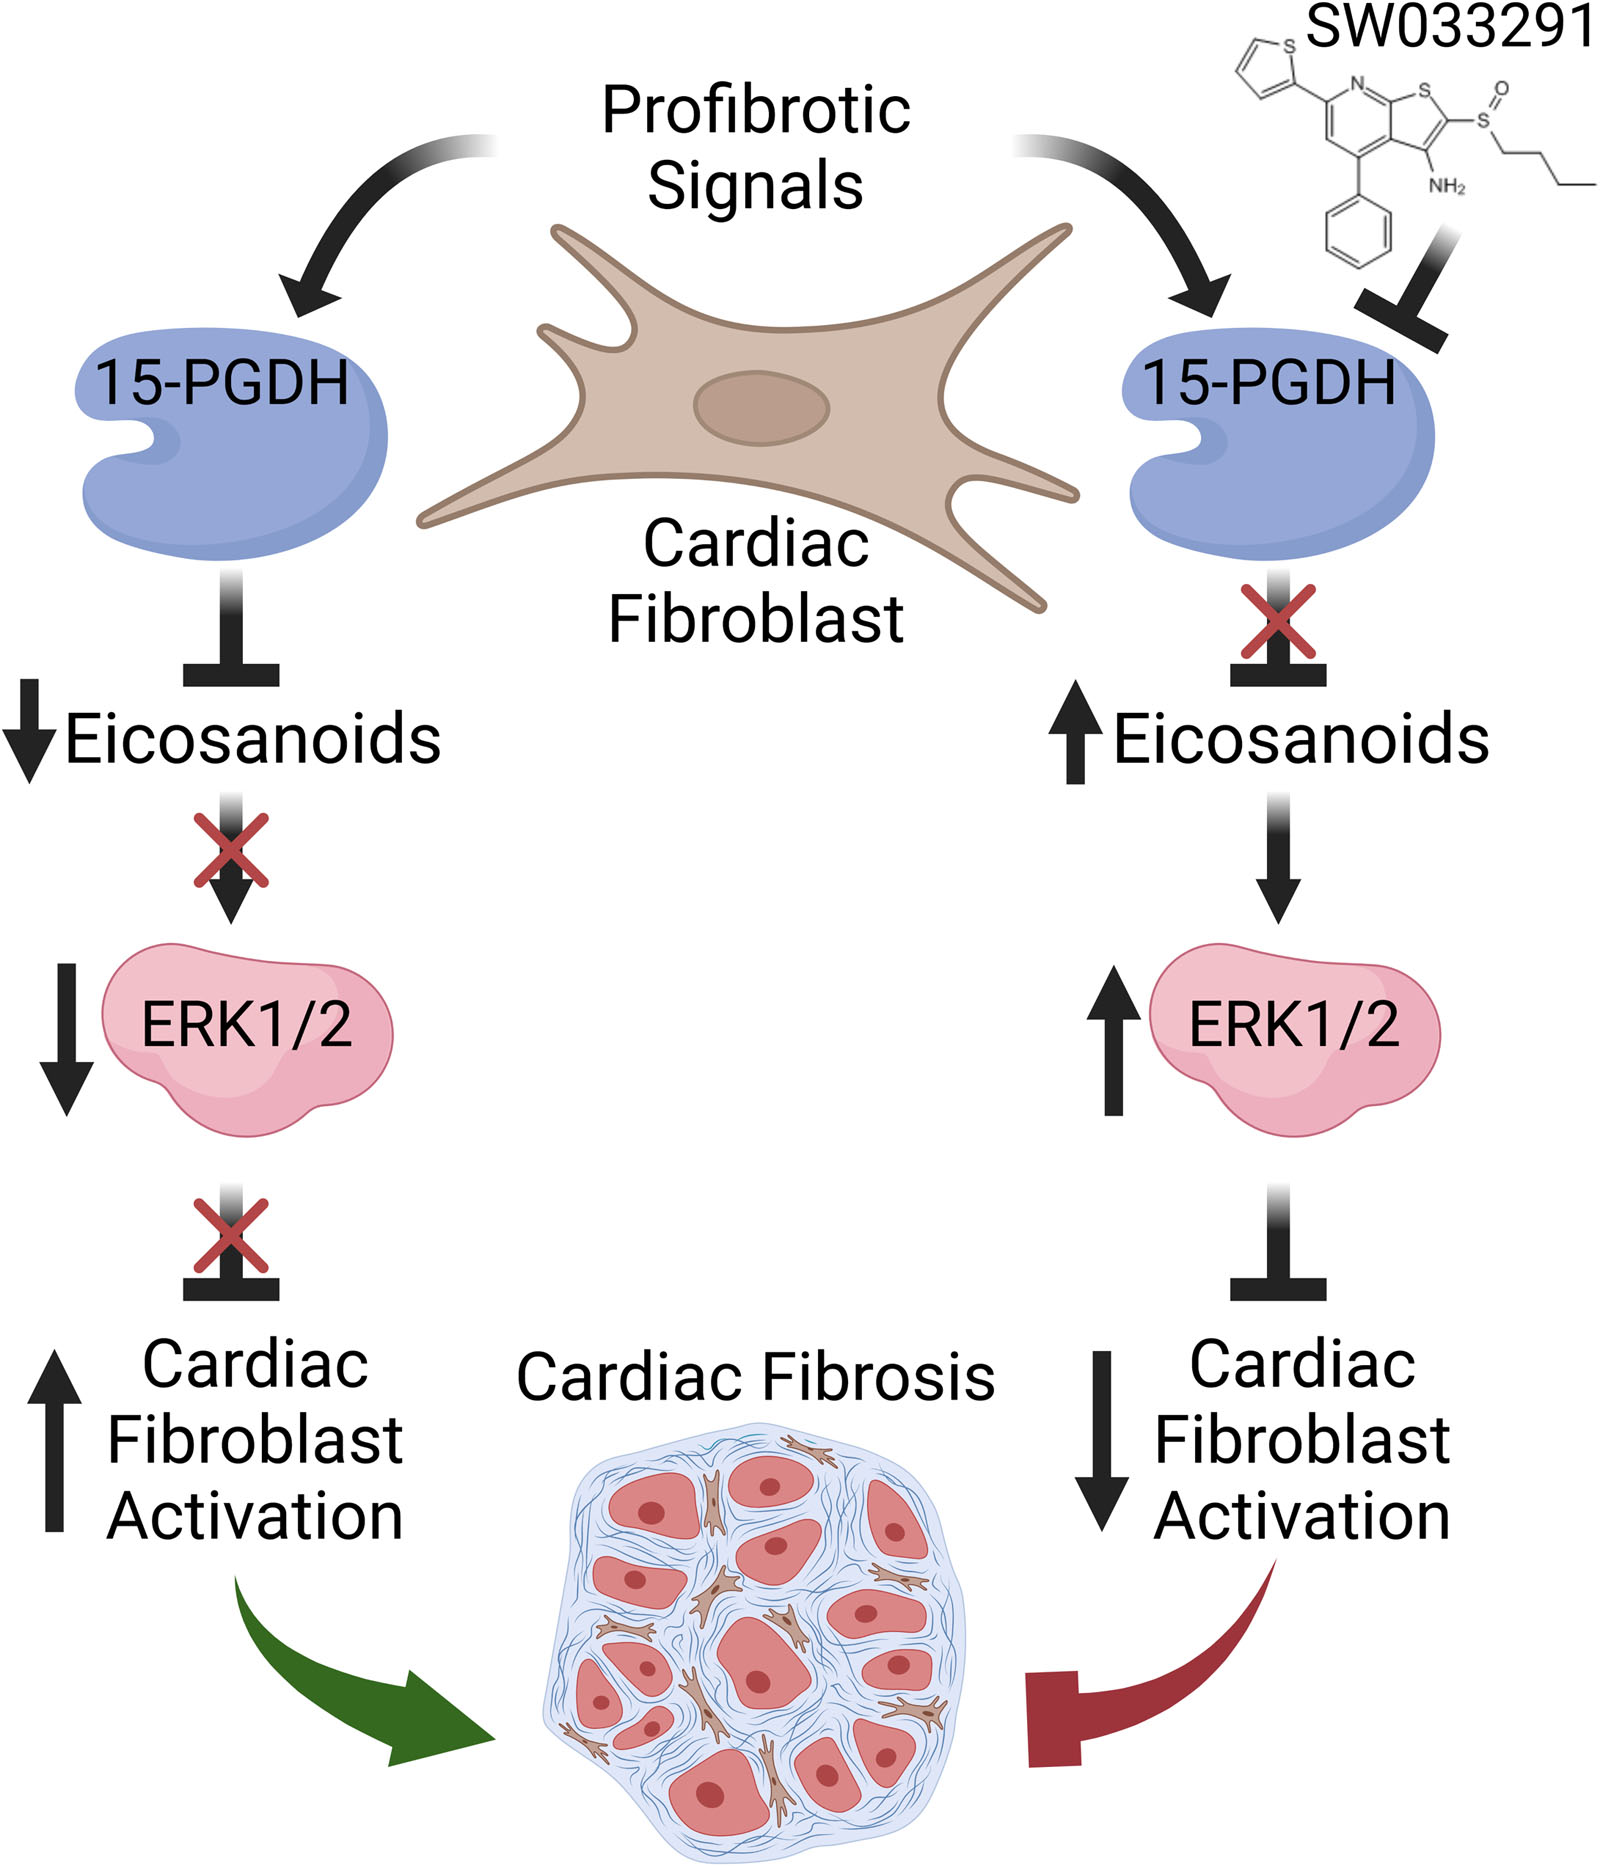 Inhibition of Eicosanoid Degradation Mitigates Fibrosis of the Heart